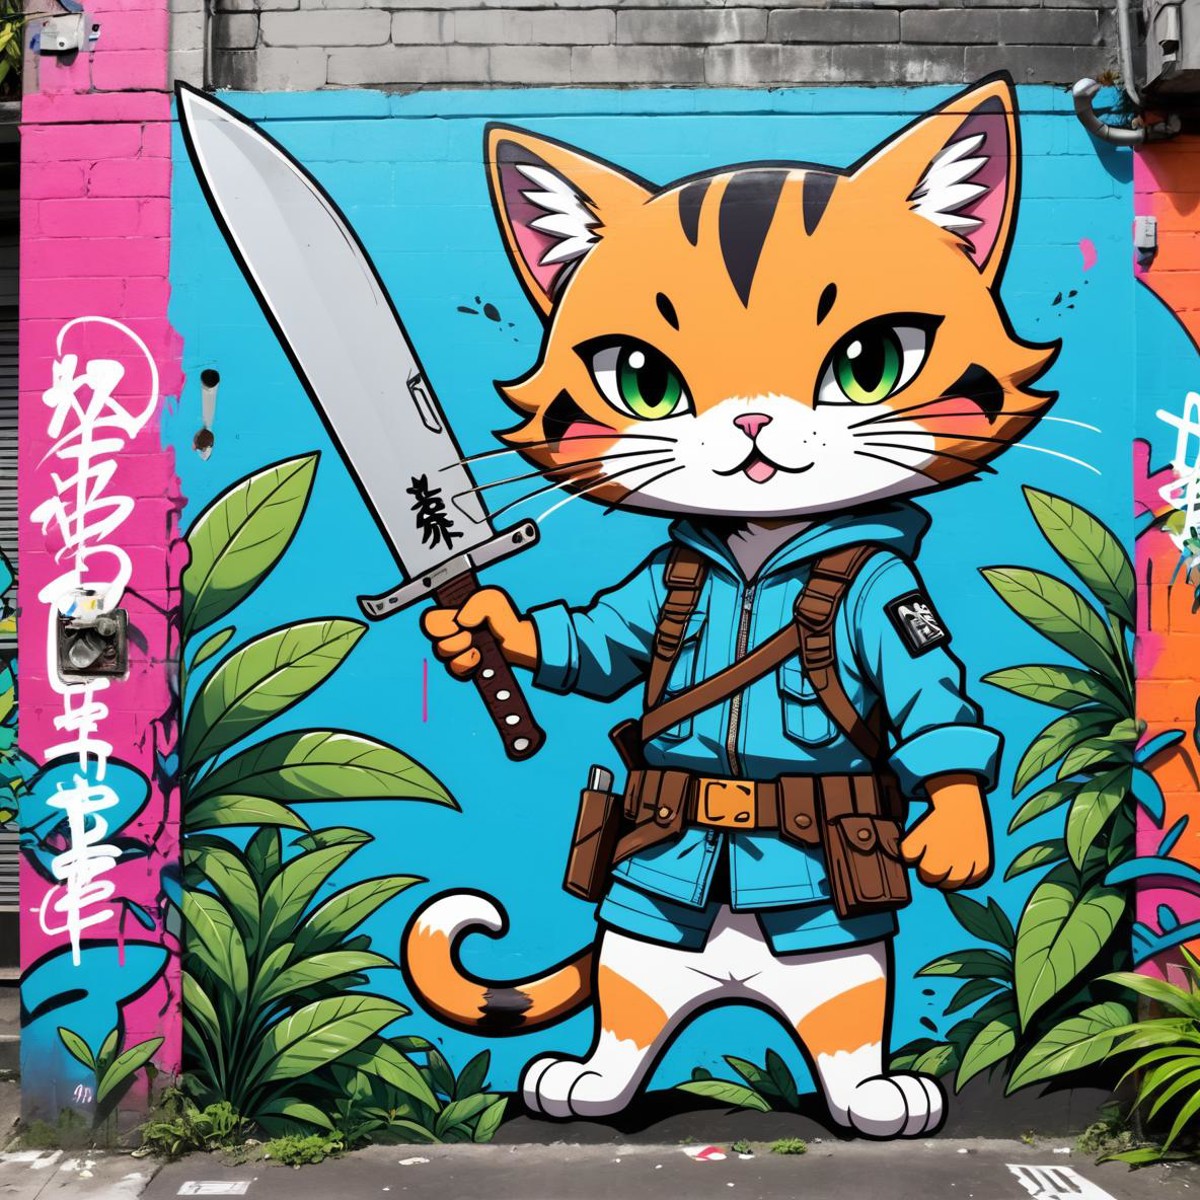 Graffiti style anime style, adventurer cat, dense jungle, holding a machete . Street art, vibrant, urban, detailed, tag, m...